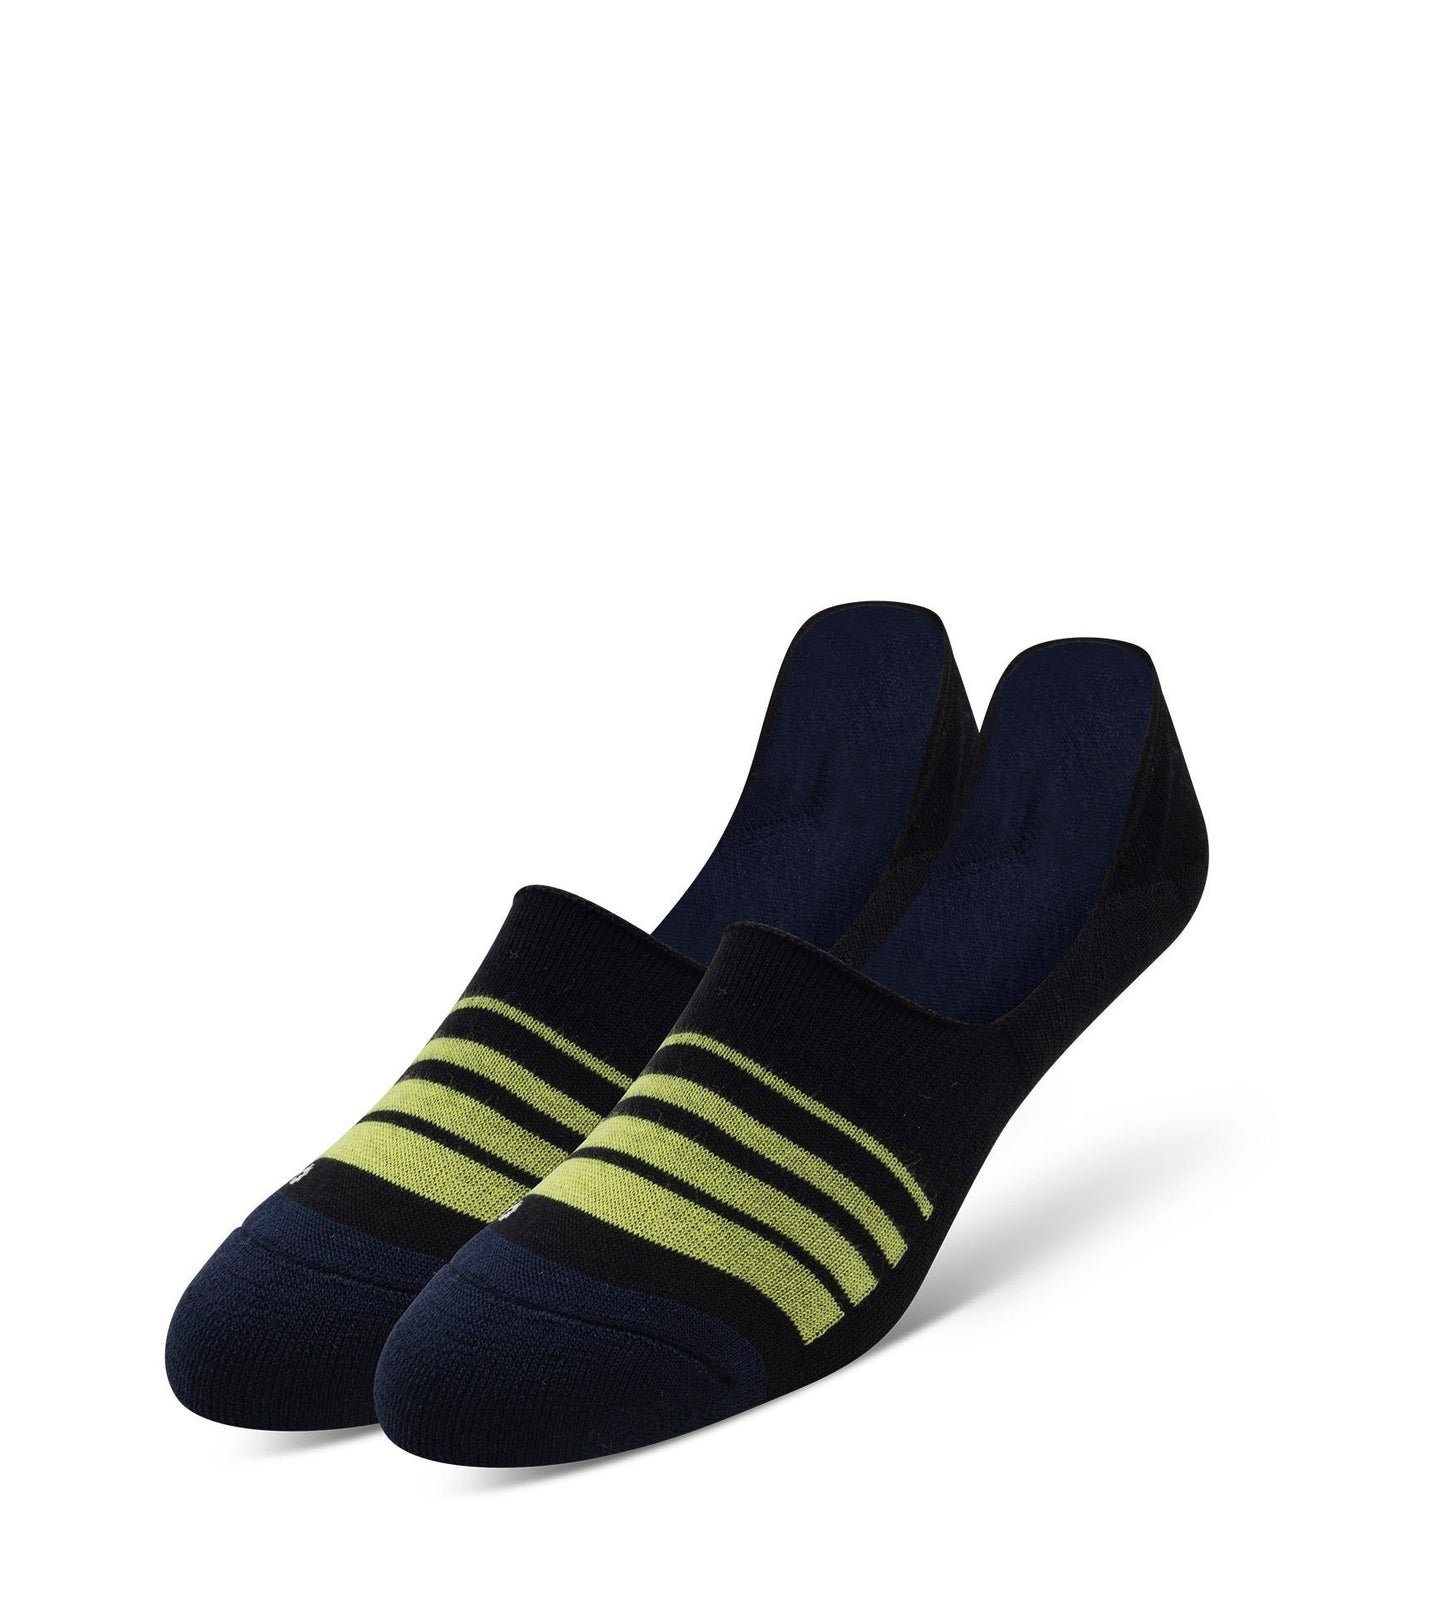 Cushion No Show Socks 3 Pack, green stripes on navy